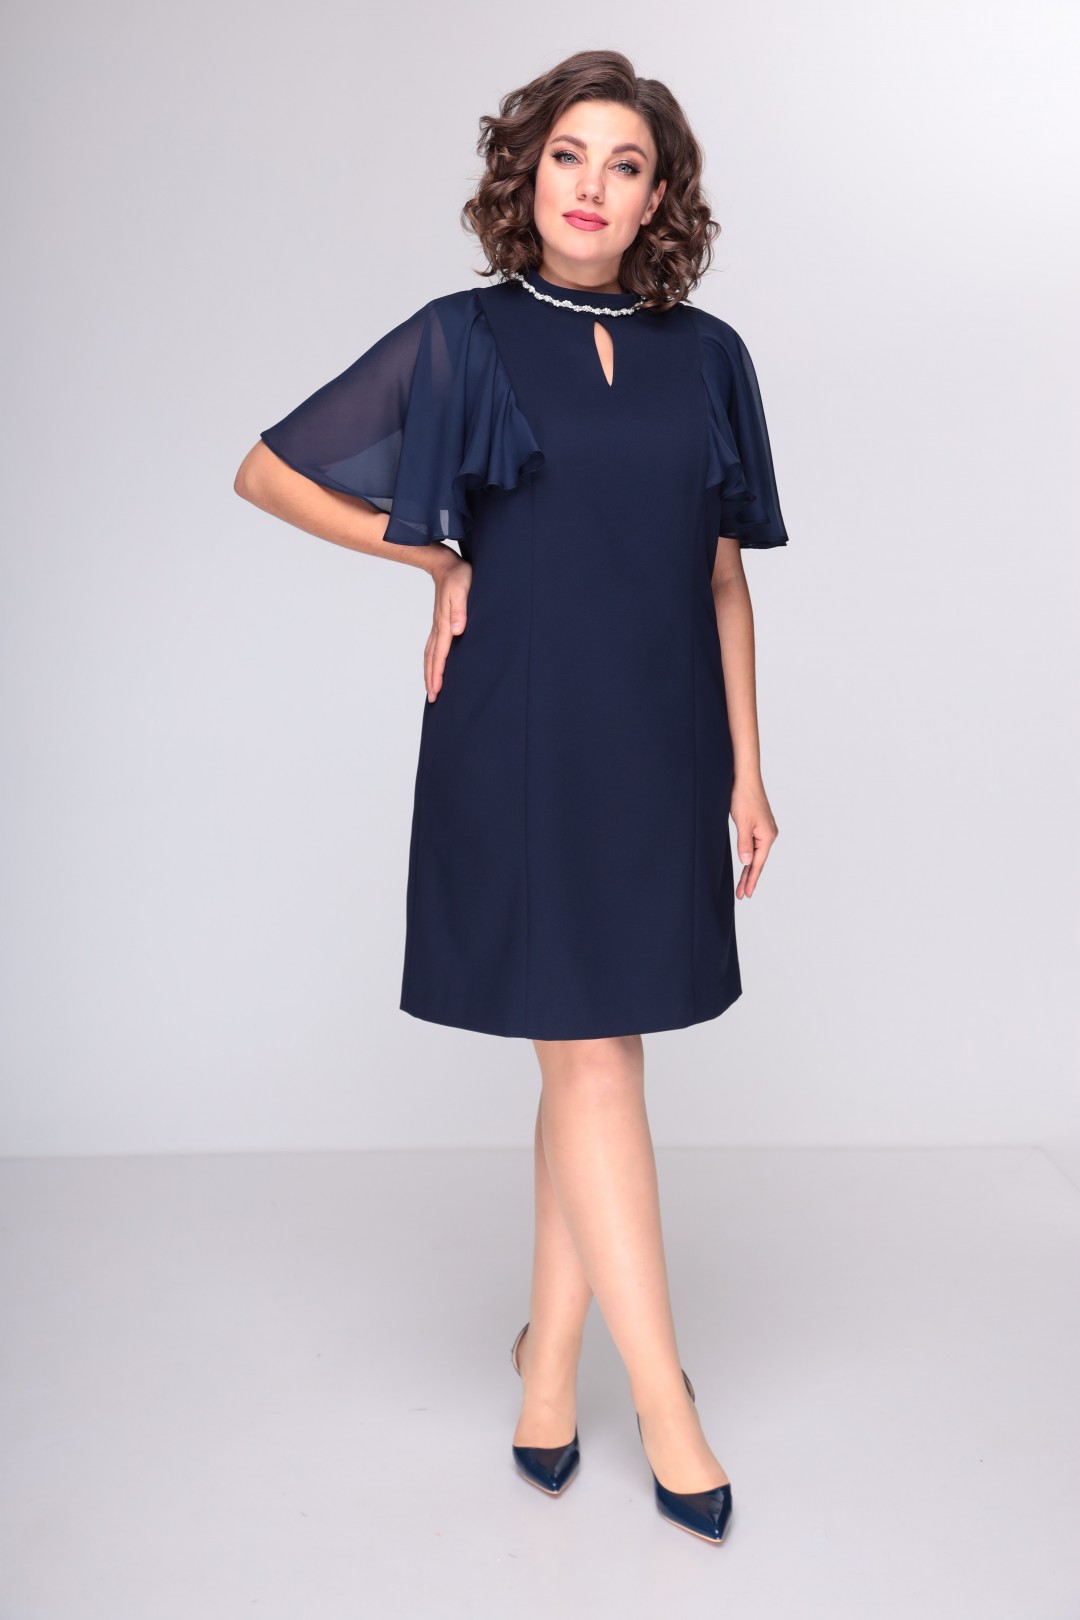 Платье Мода-Версаль 2359 т.синий